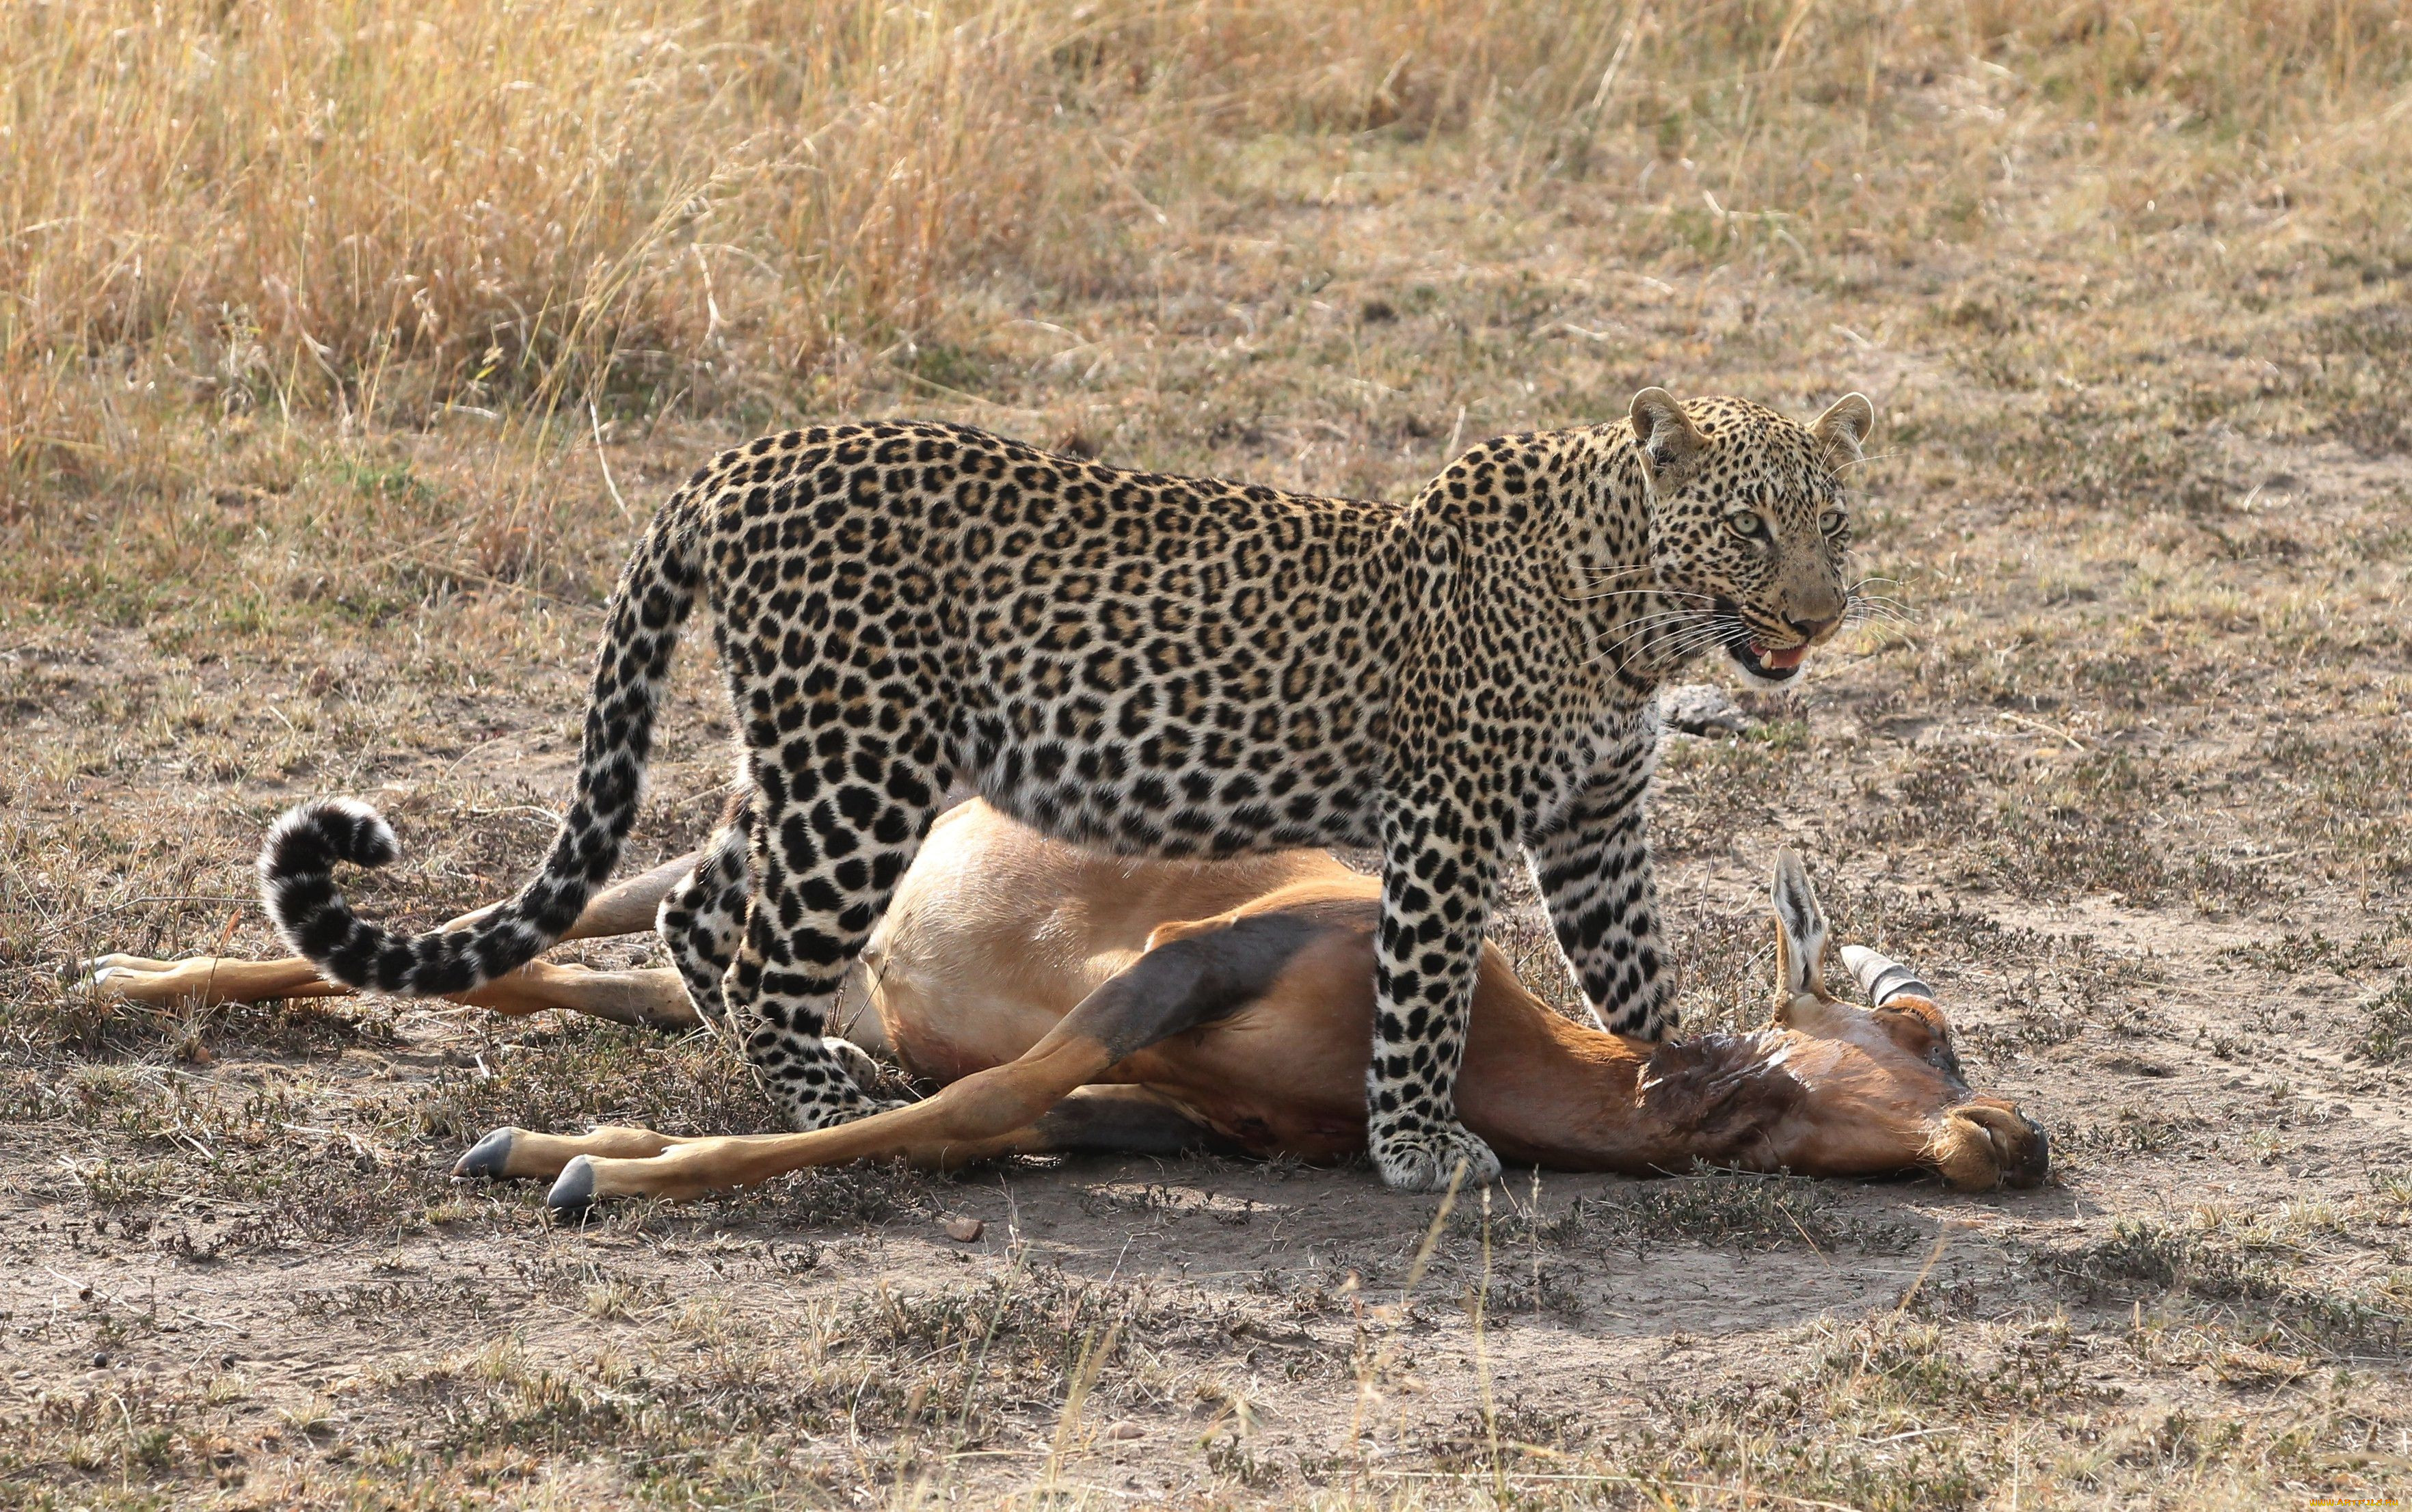 Размножение хищников. Переднеазиатский леопард охотится. Леопард охотится на антилопу. Леопард на охоте. Леопард напал на антилопу.